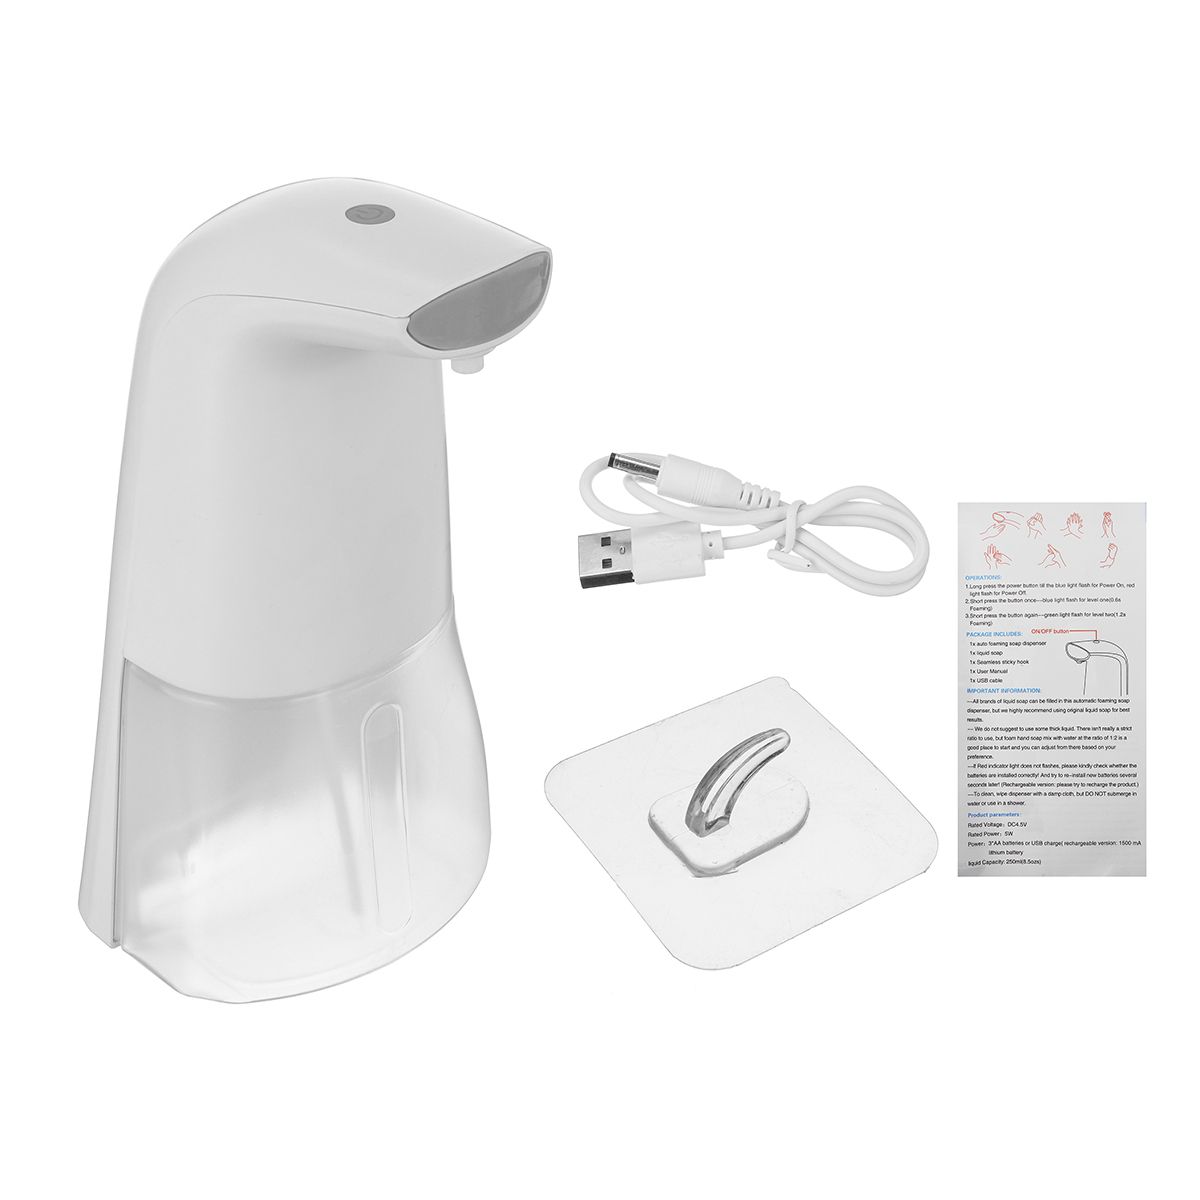 250ml-Auto-Foaming-Soap-Dispenser-Touchless-Sensing-Foam-For-Bathroom-Kitchen-1676732